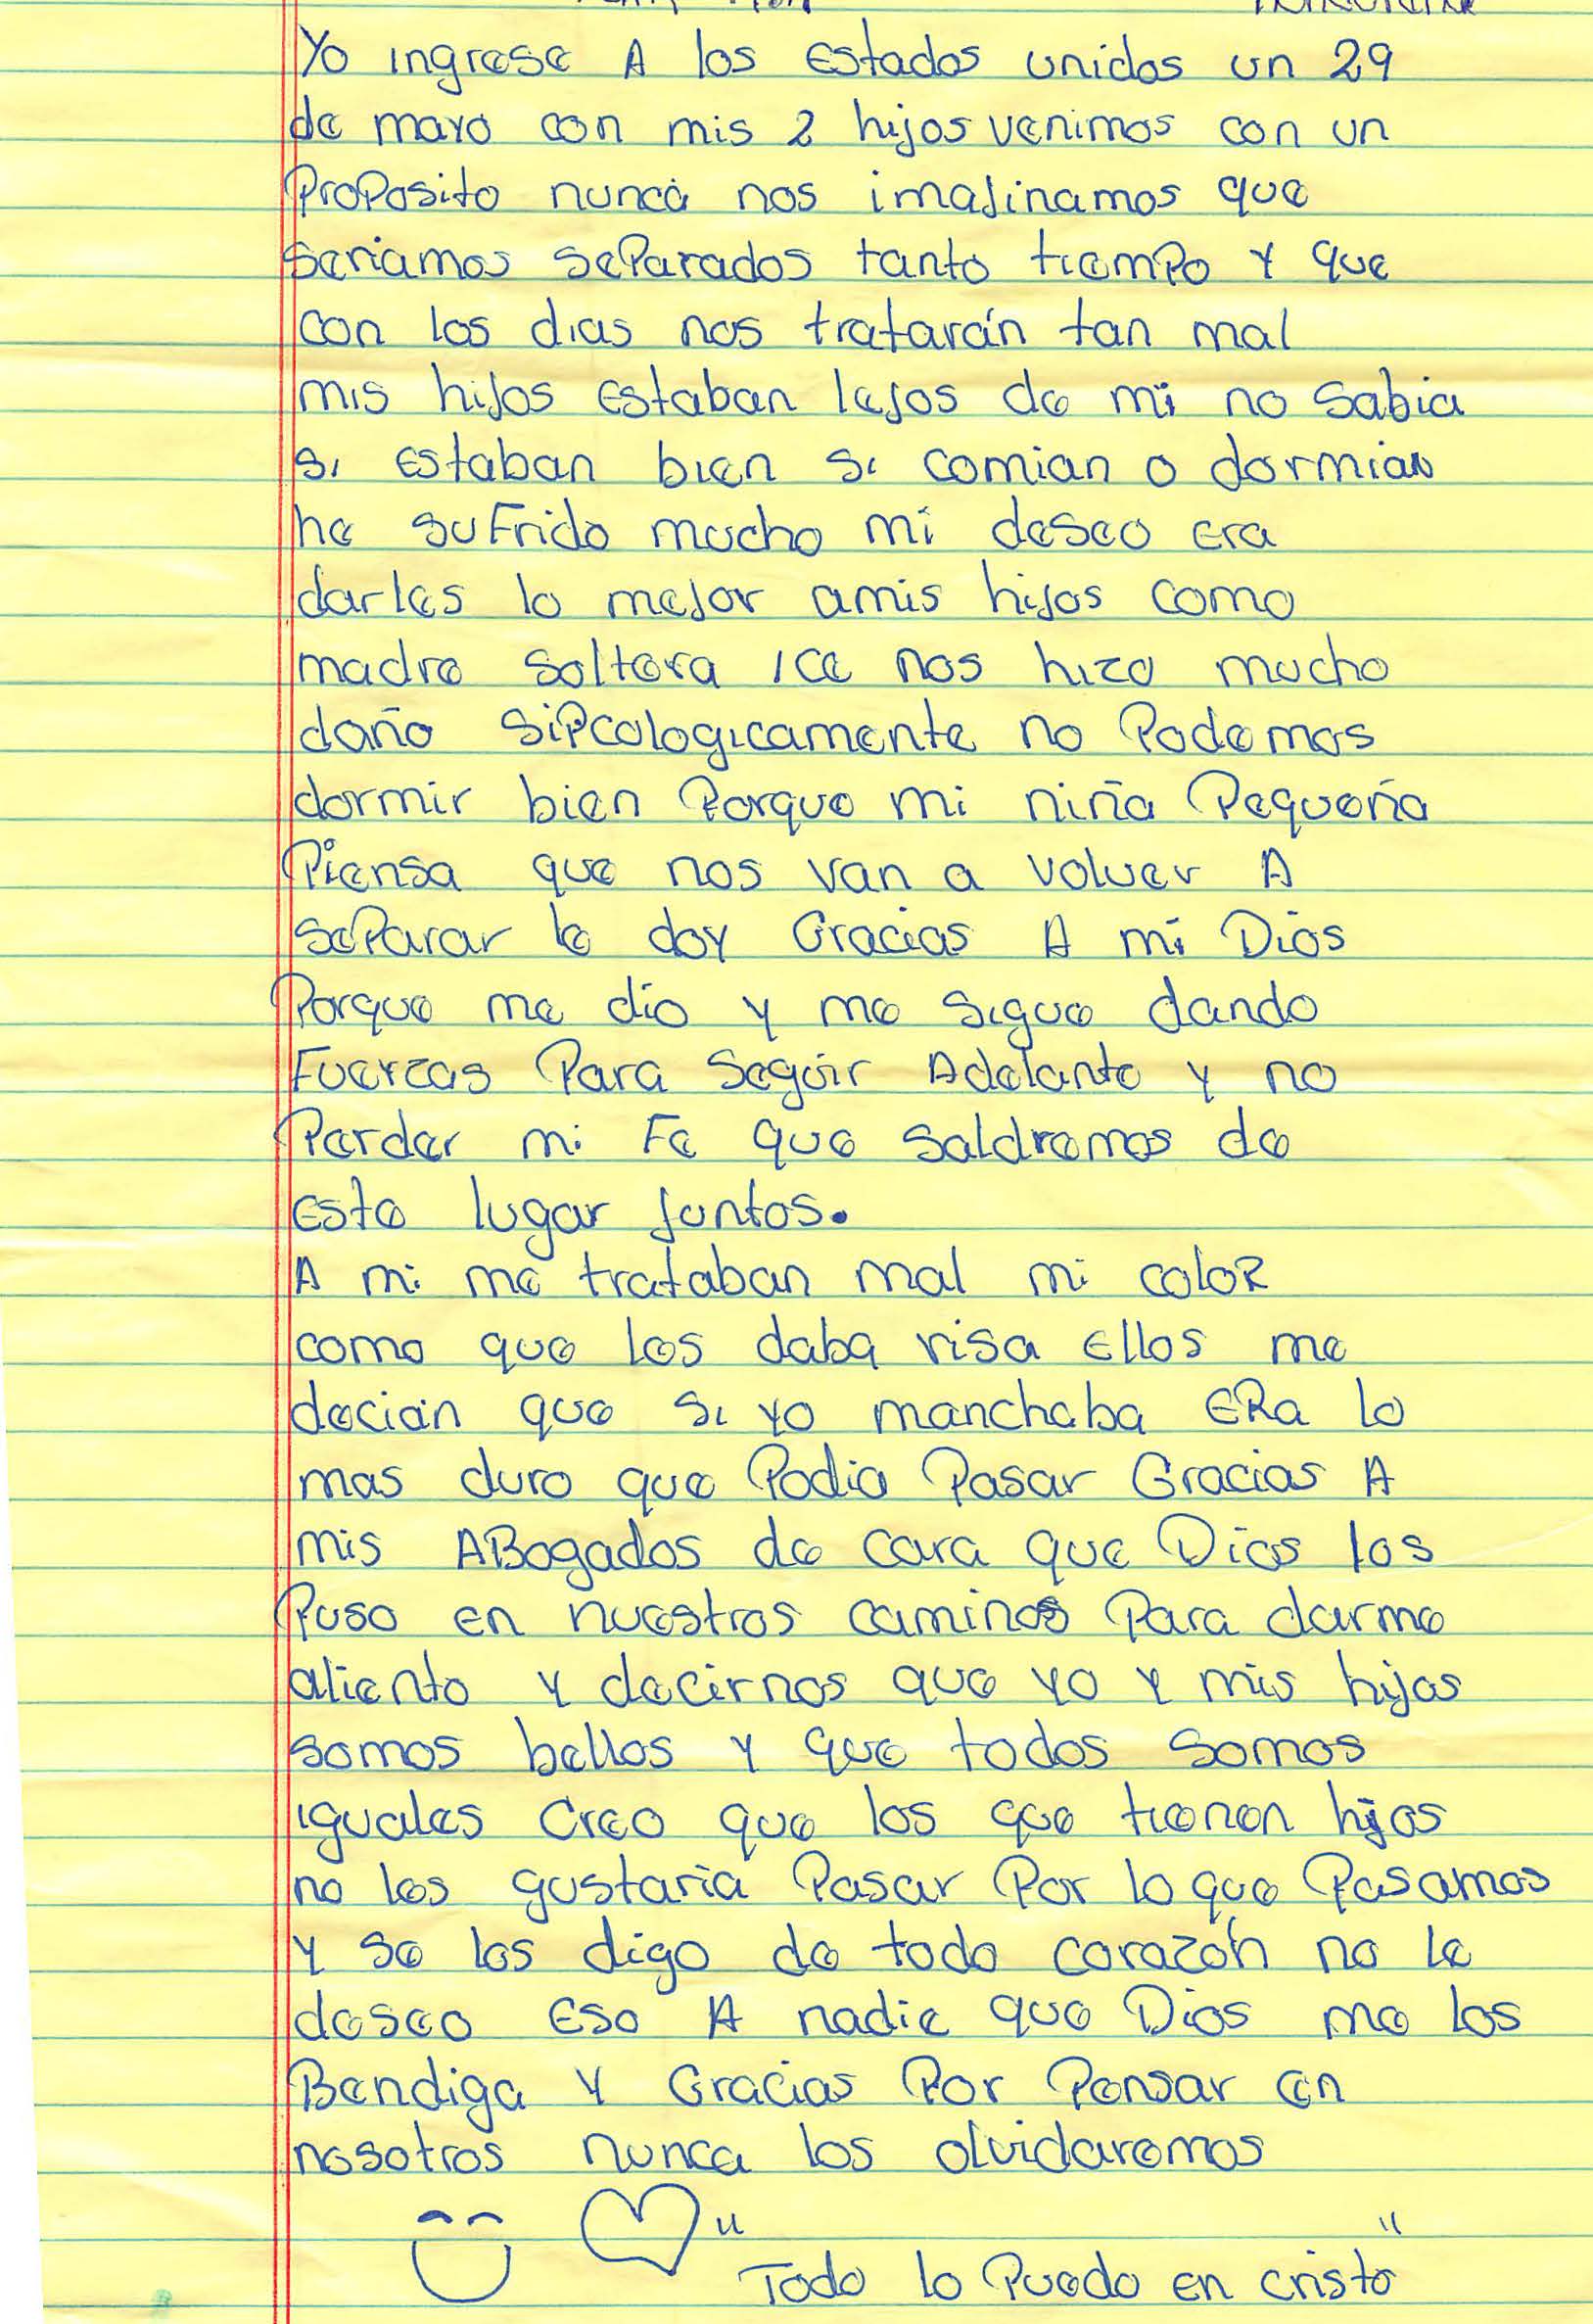 Anna's Handwritten Letter